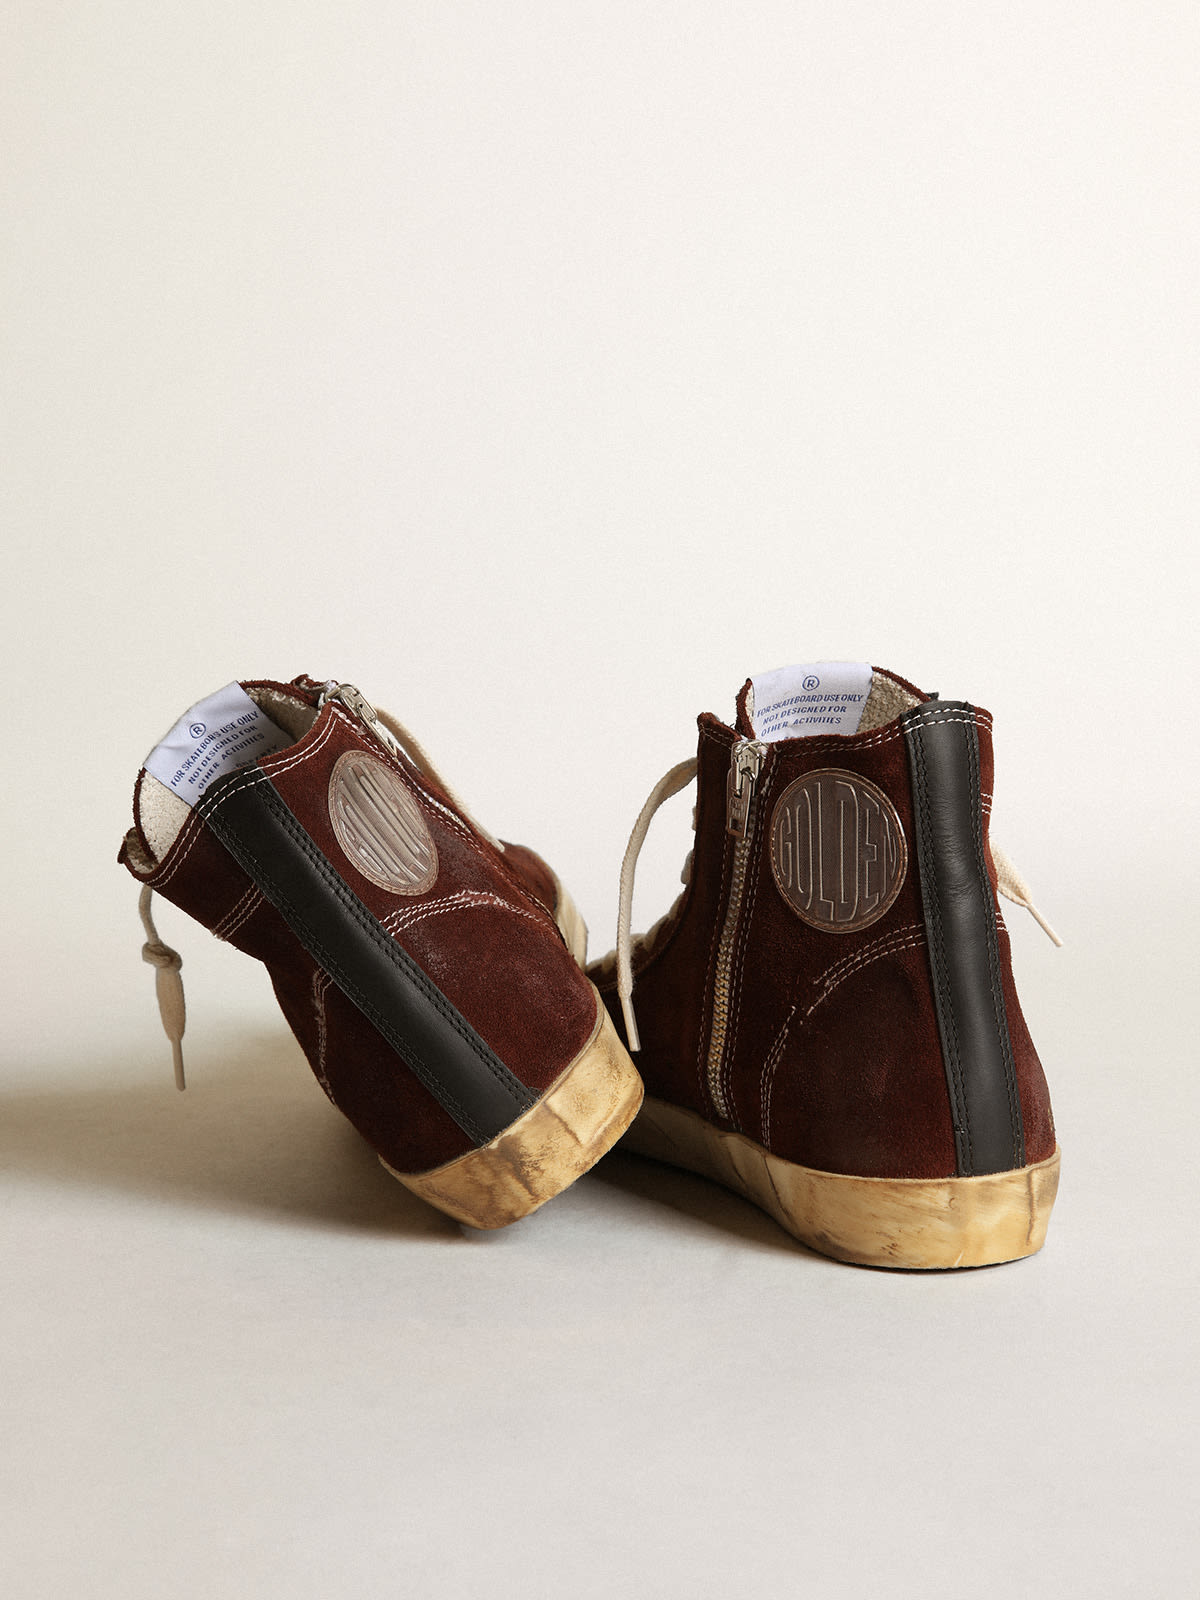 Golden Goose - Sneakers Francy en daim marron avec étoile en cuir rose et contrefort en cuir nappa noir in 